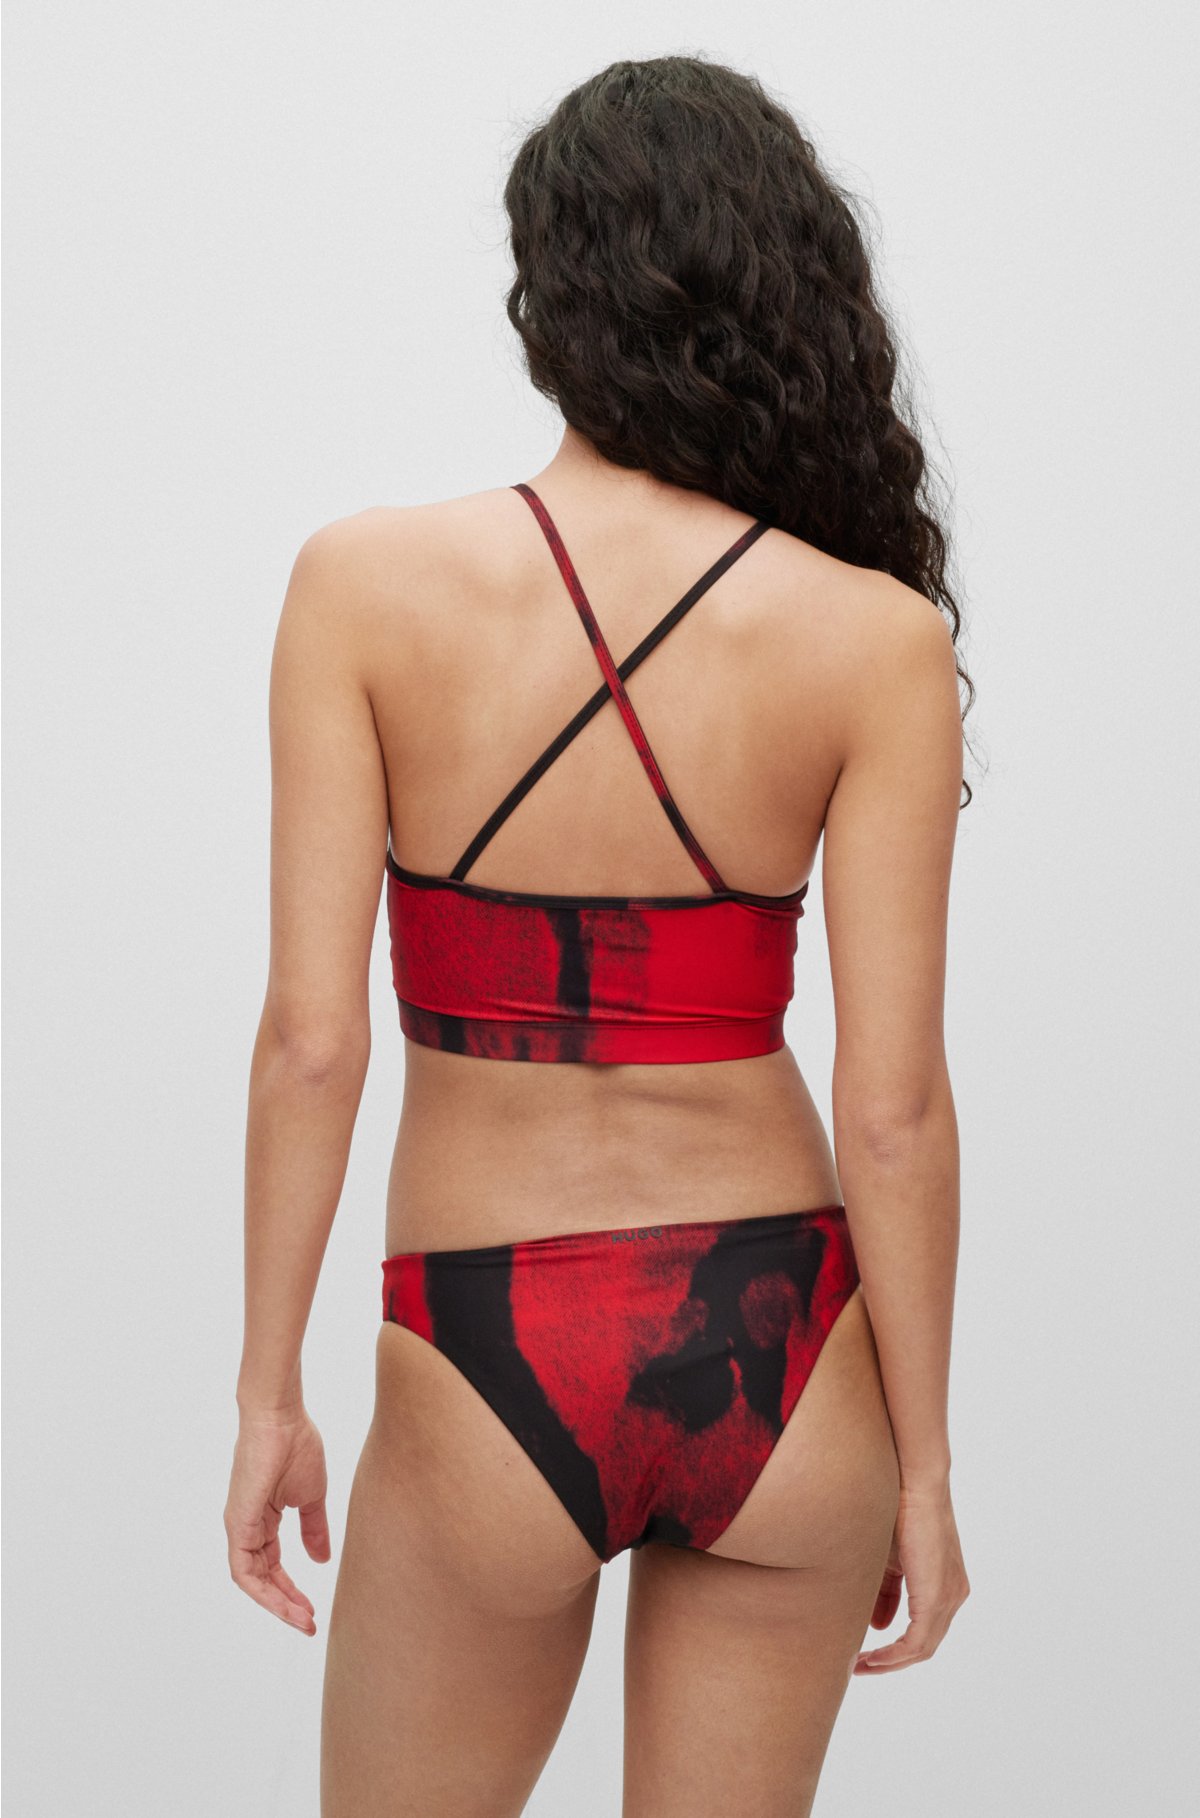 HUGO - Brazilian-style bikini bottoms with logo print